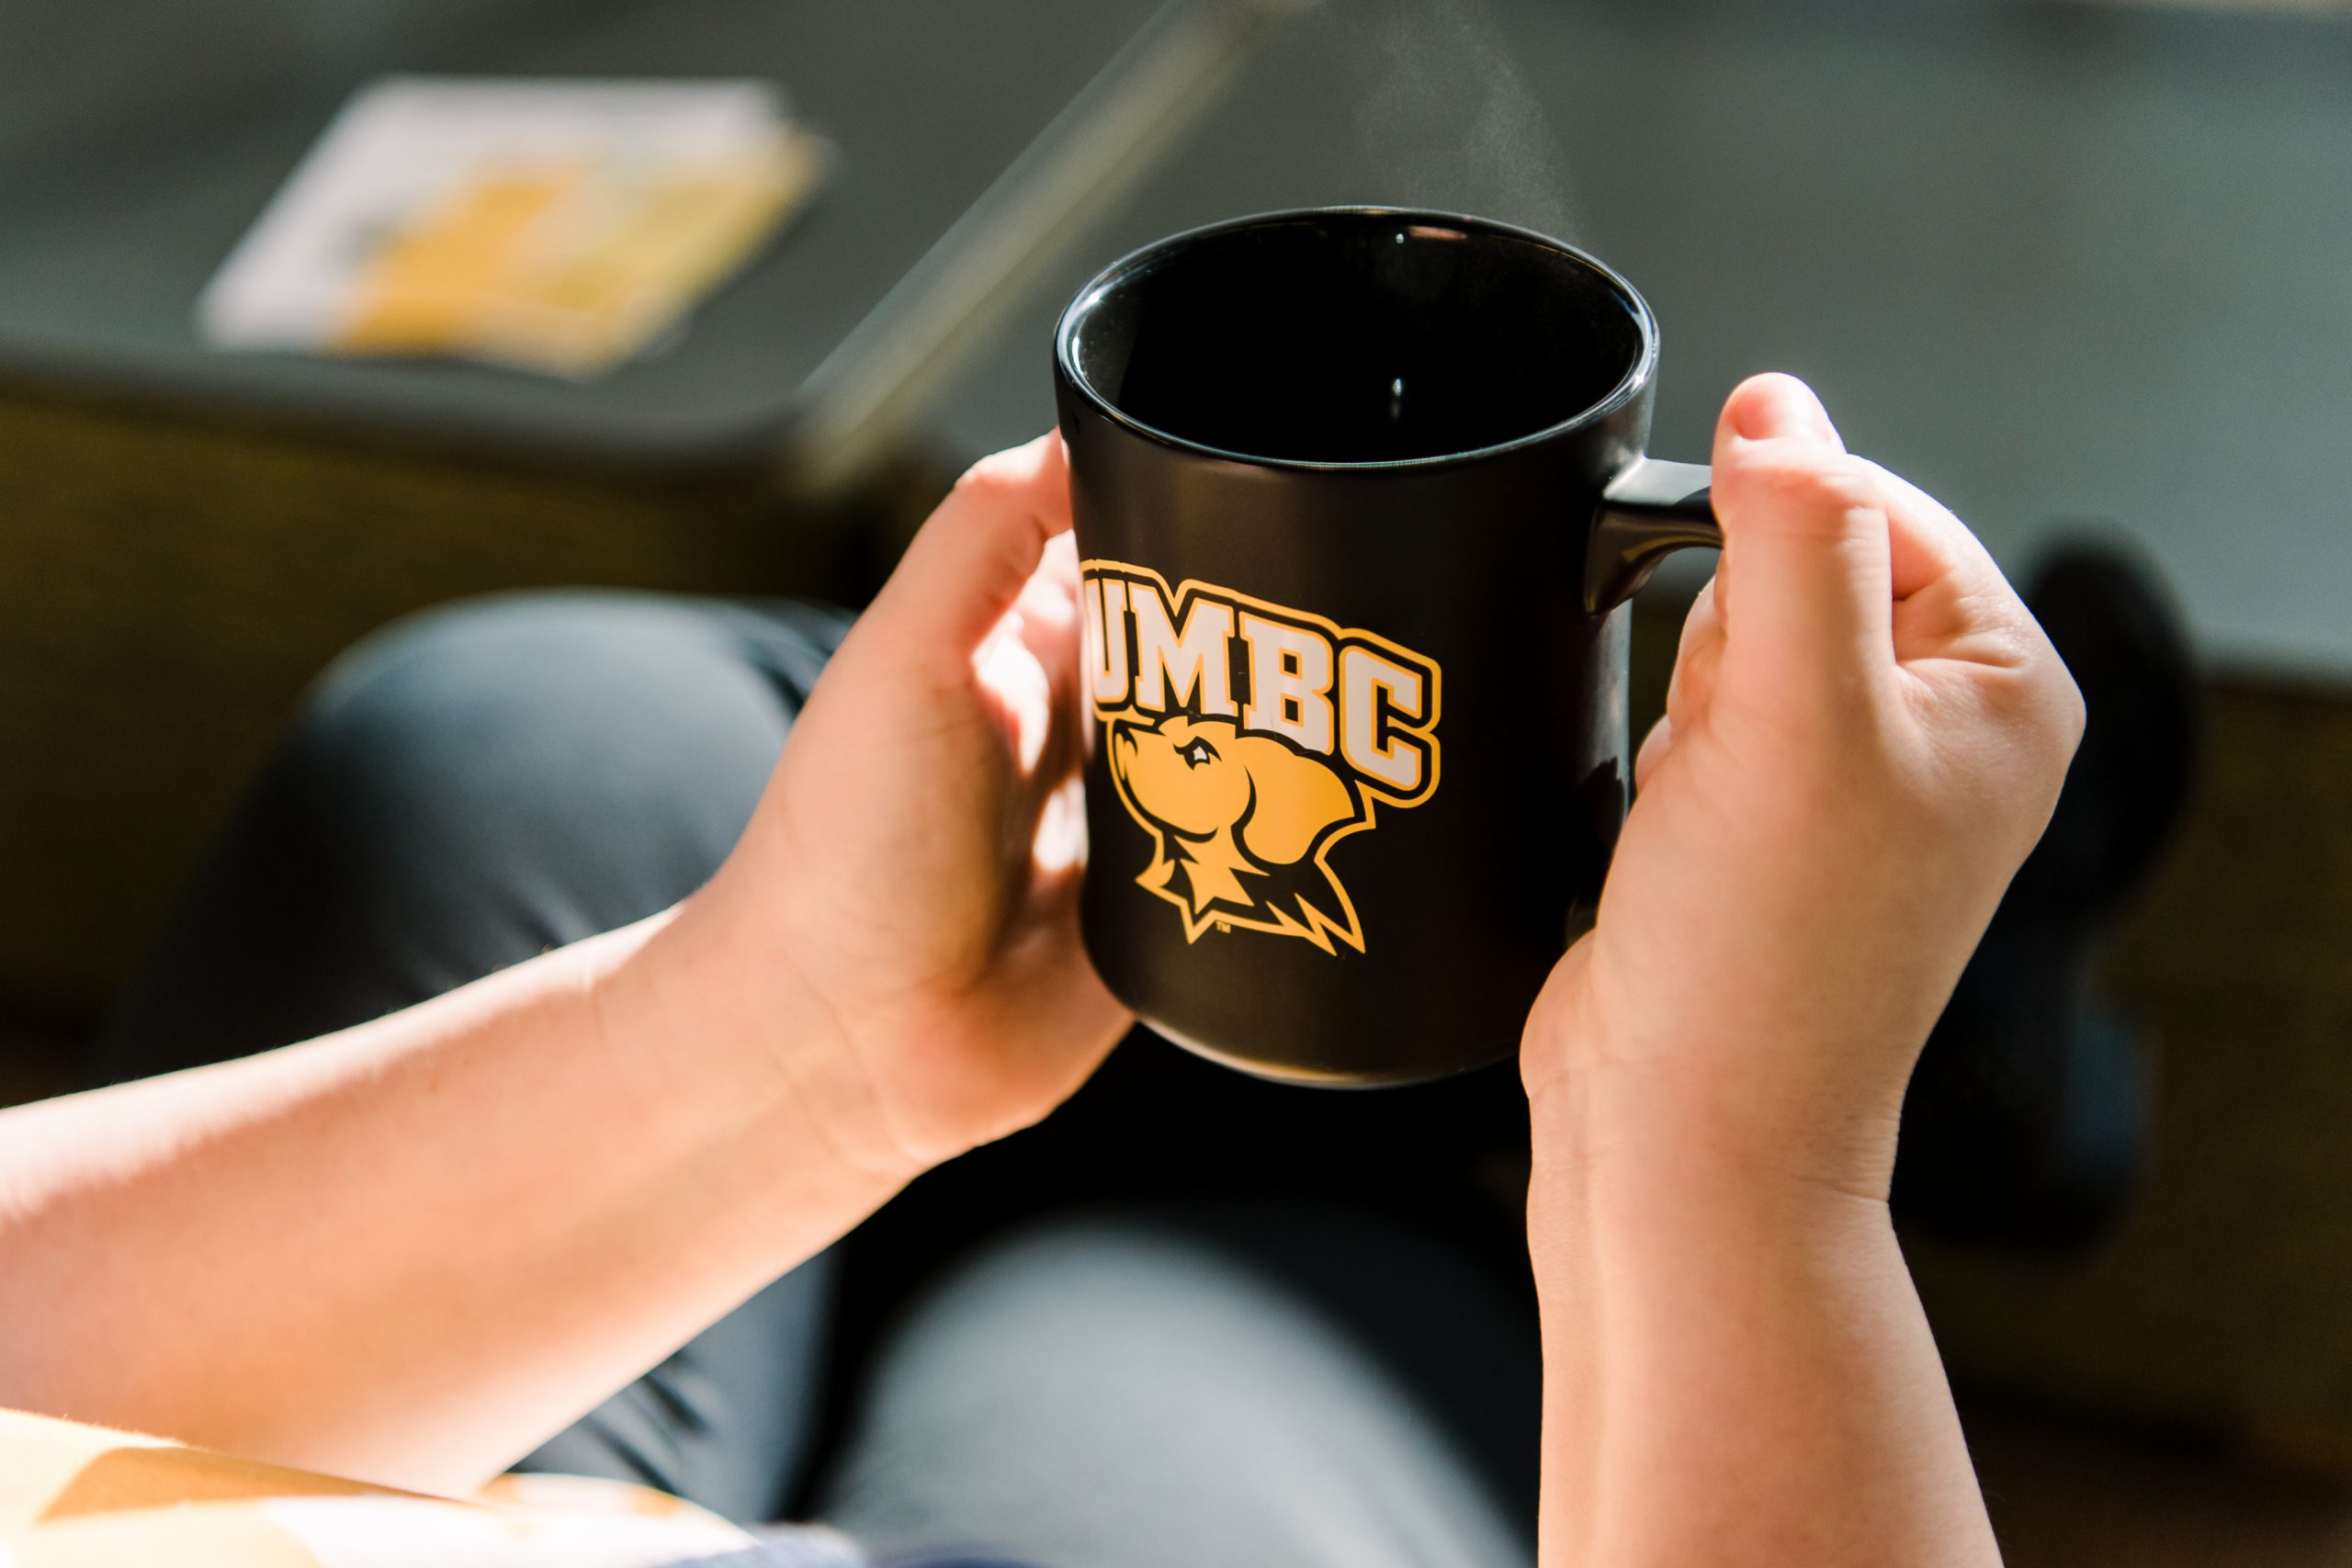 Hands holding a steaming UMBC mug